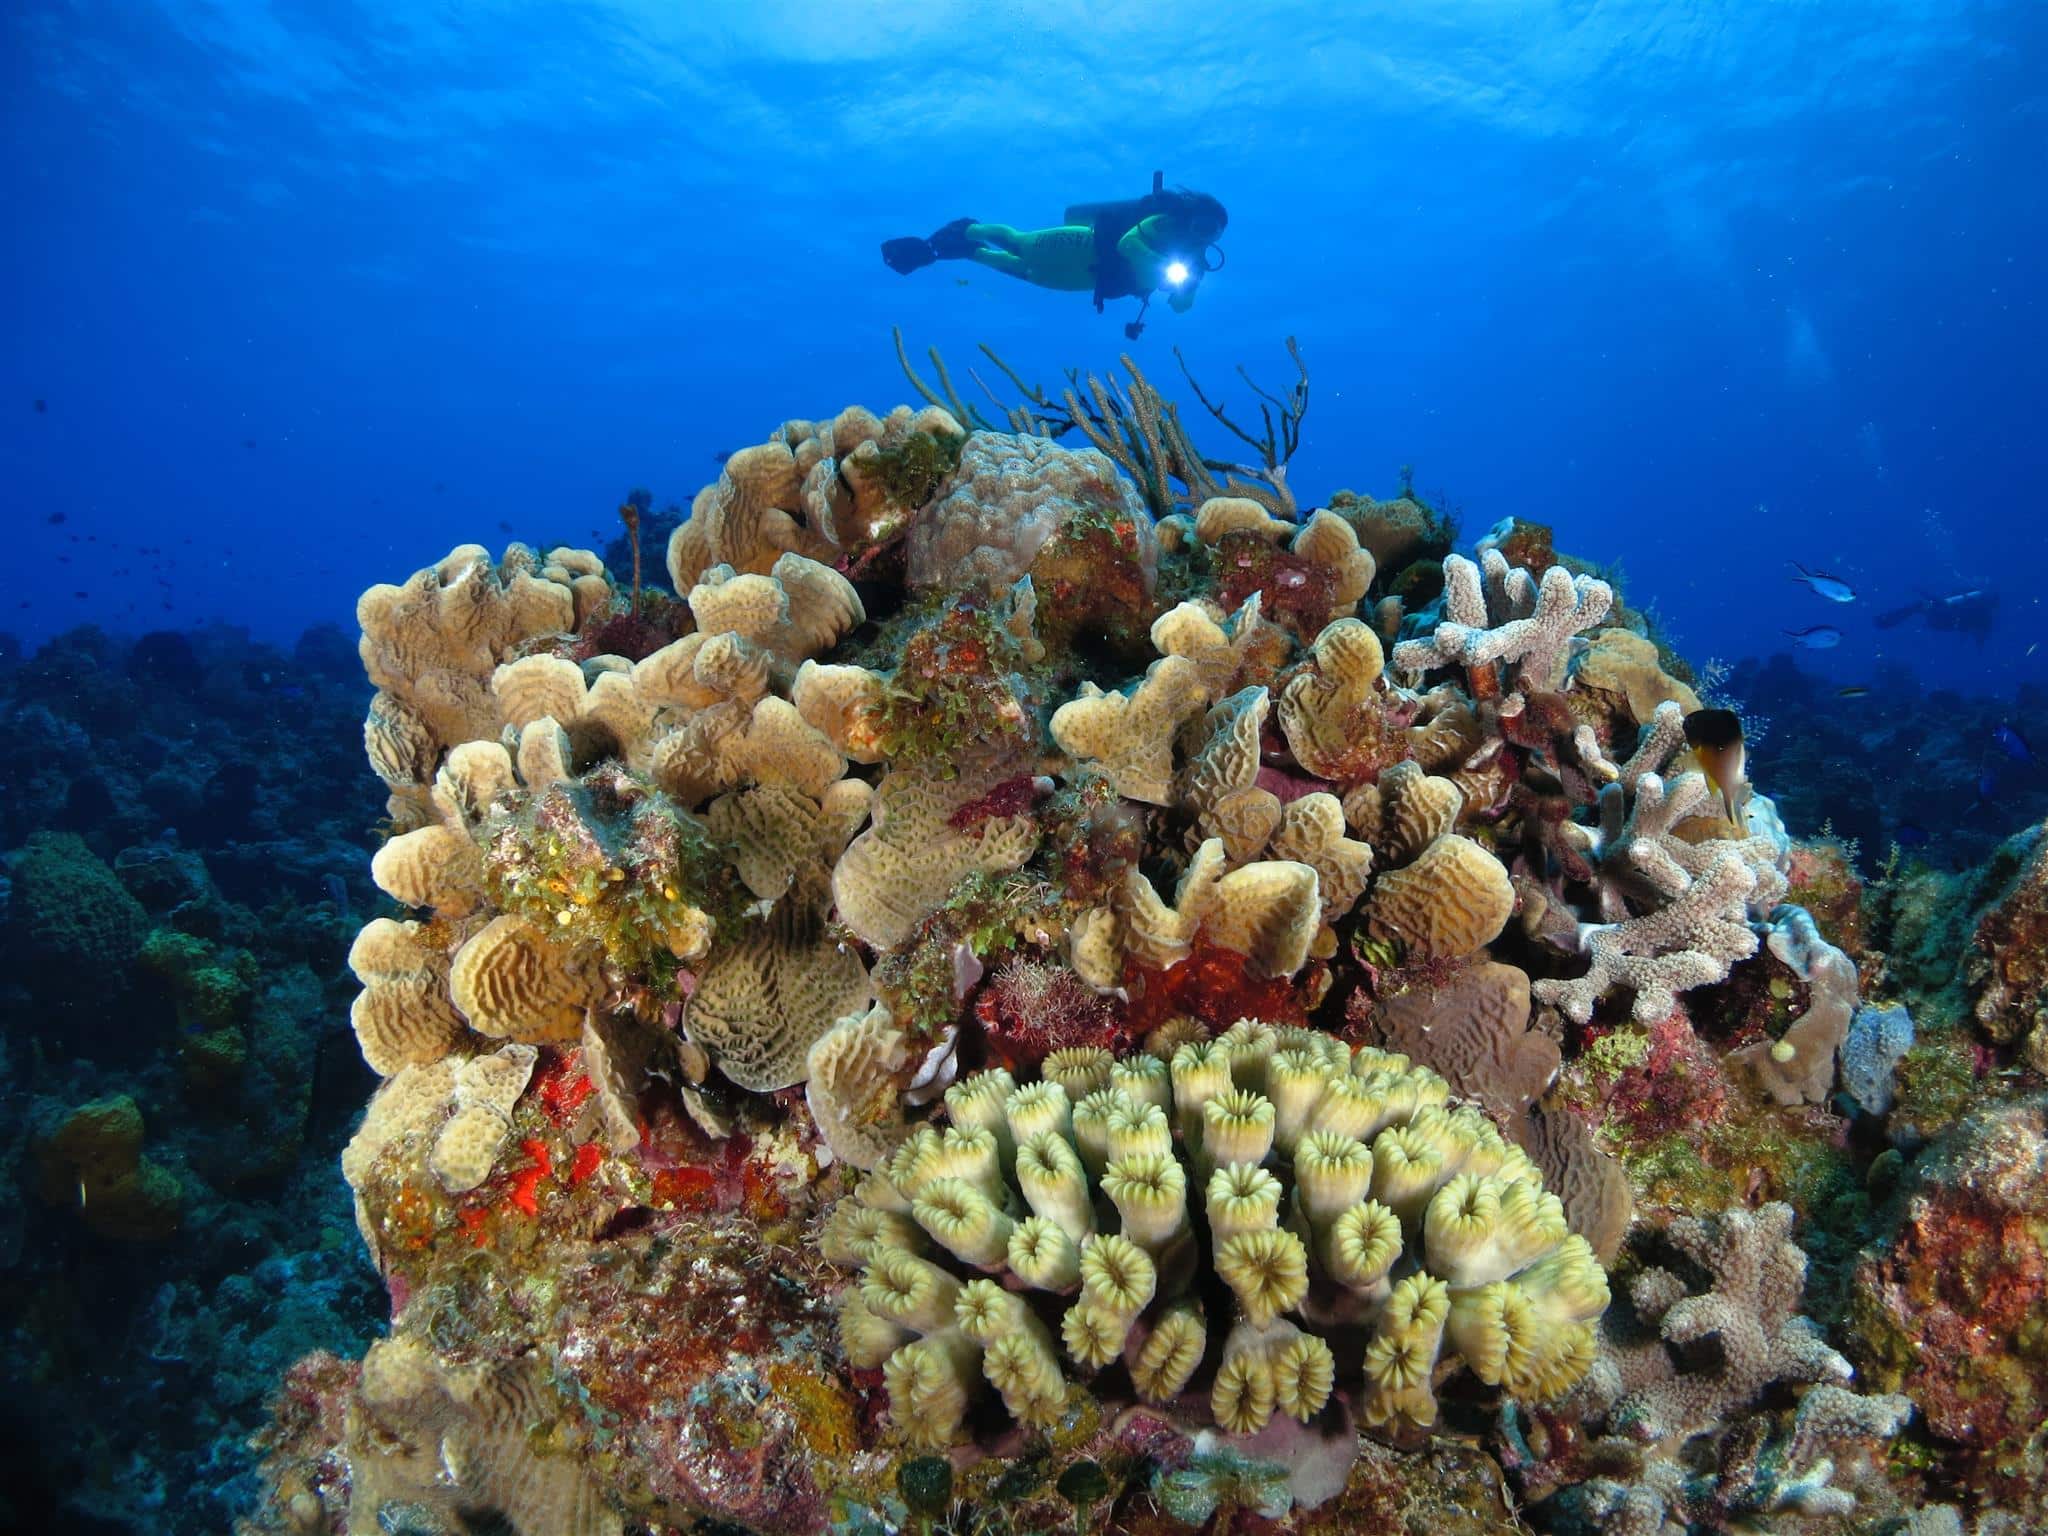 Best Caribbean Coral Reefs - Cozumel-Palancar : La estrella de los arrecifes de coral del Caribe está en Cozumel.